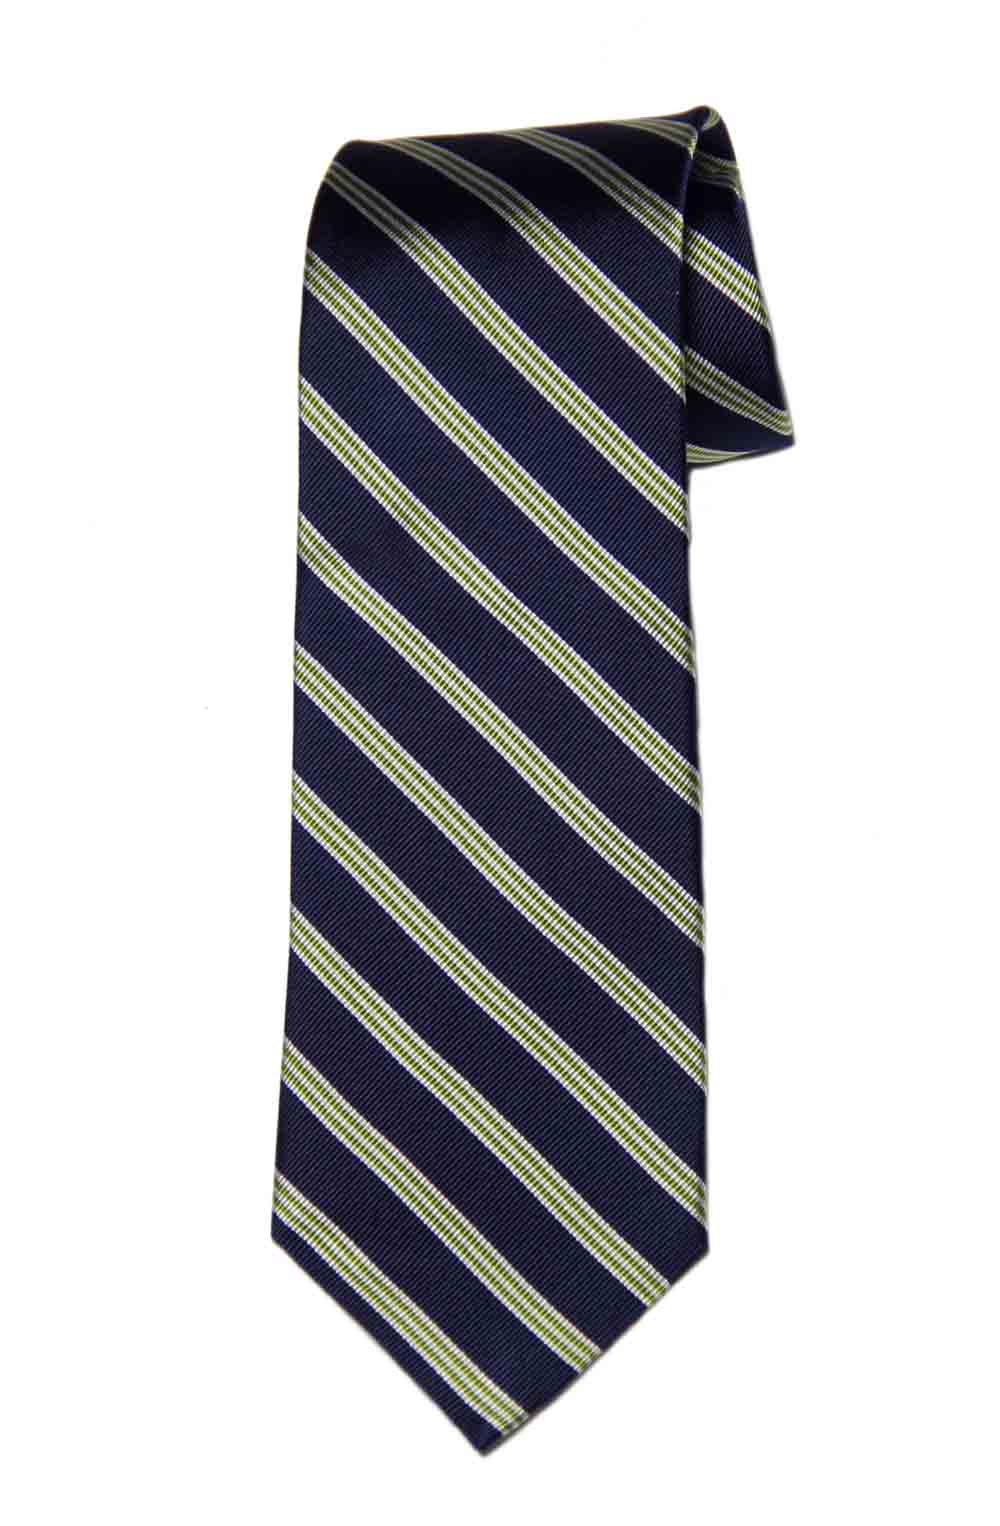 Jos A Bank Repp Stripe Tie Silk Navy Blue Green White Handmade Men's